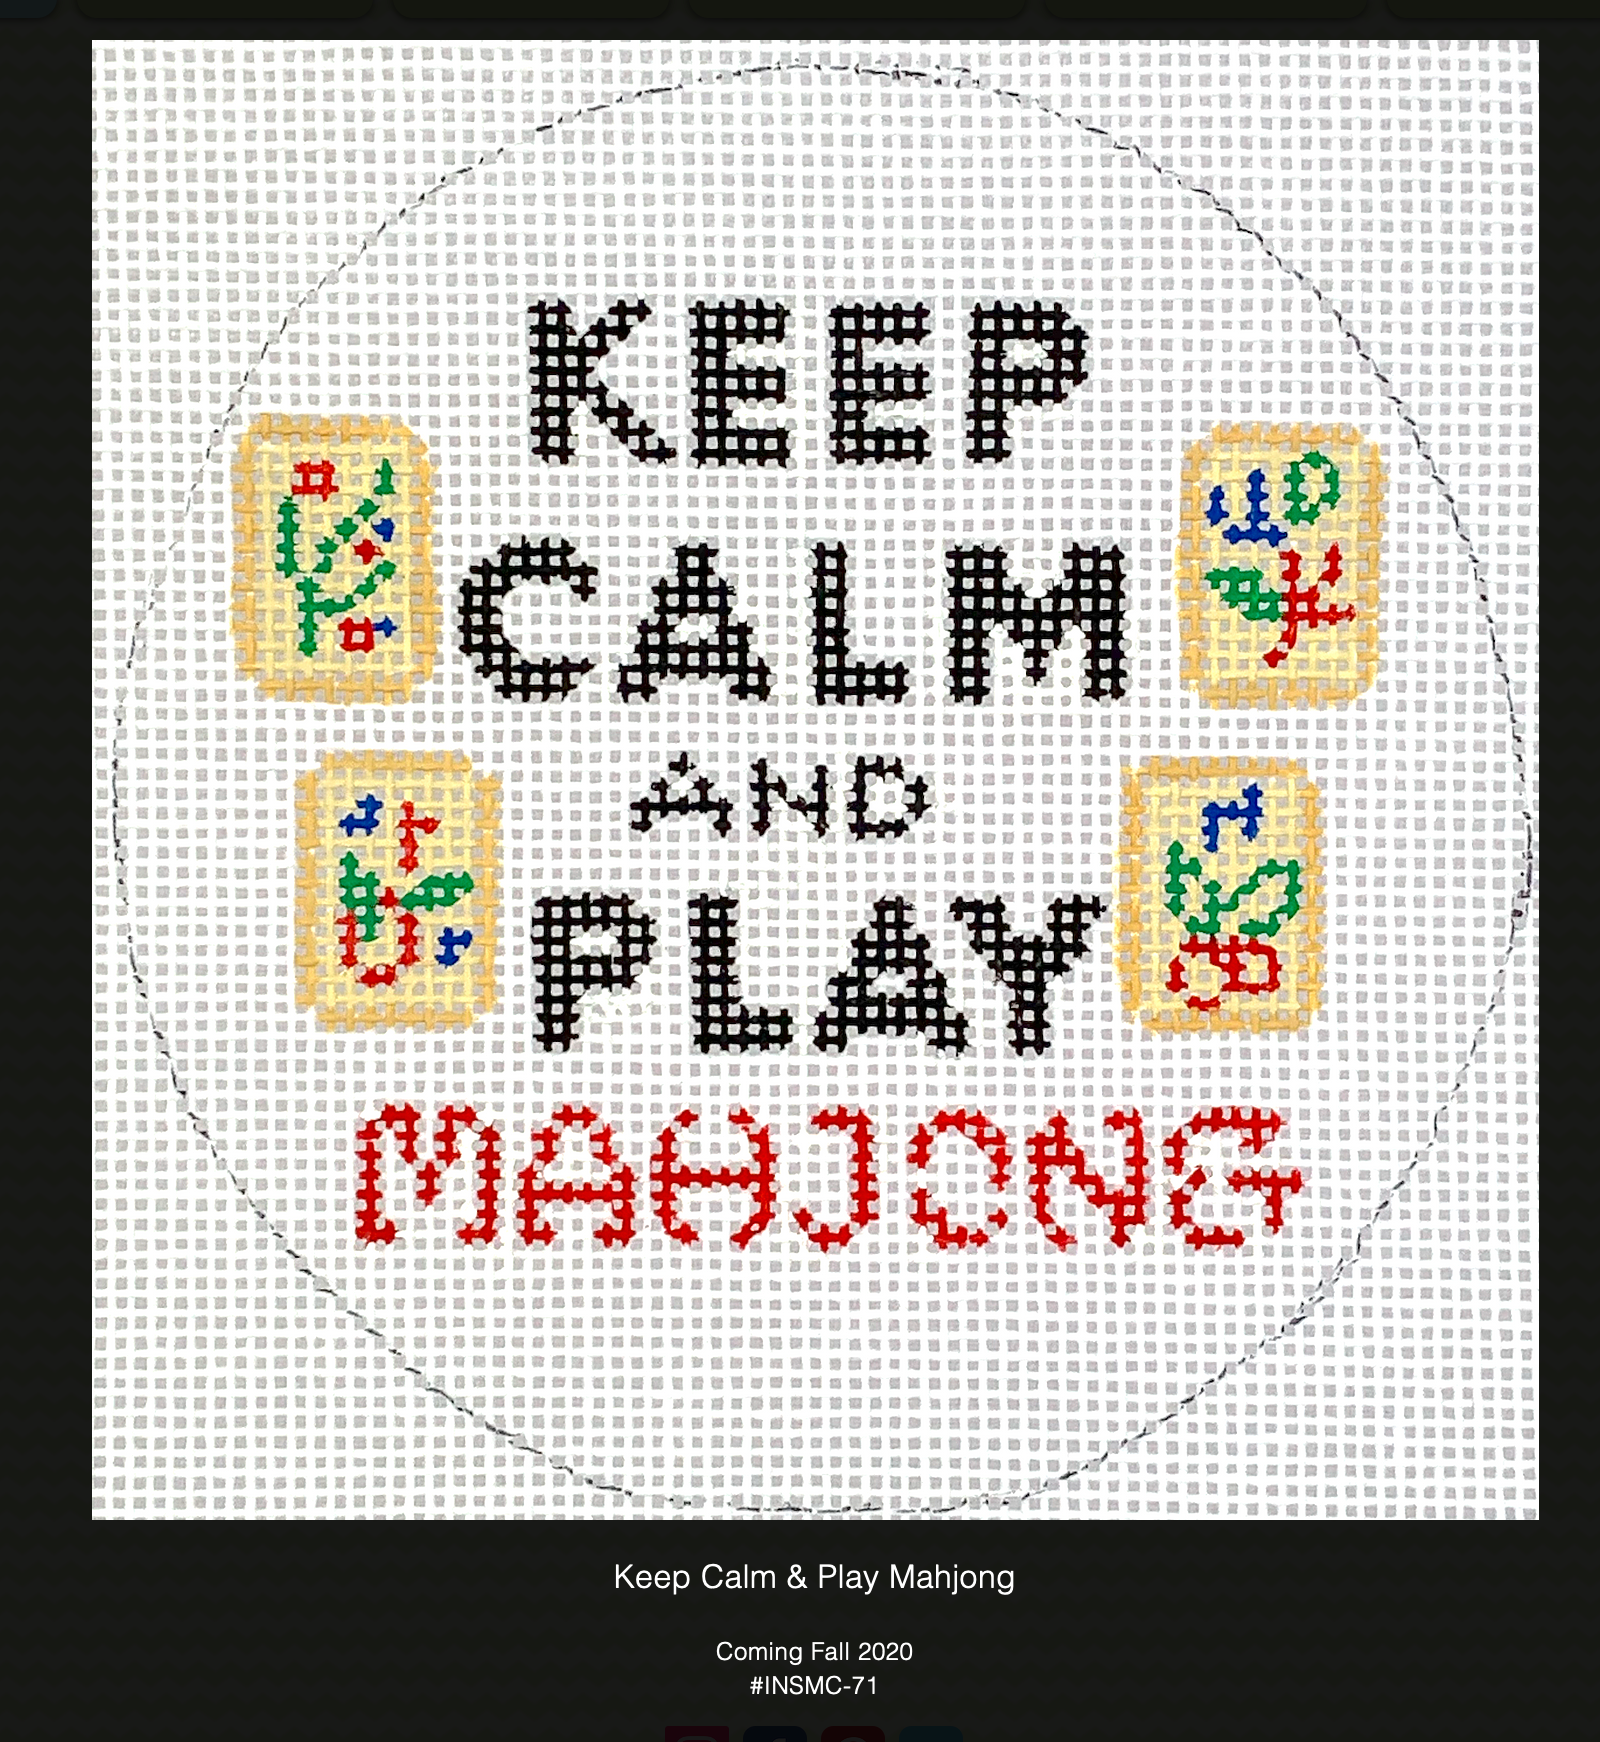 Kate Dickerson INSMC-71 Keep Calm and Play MahJong